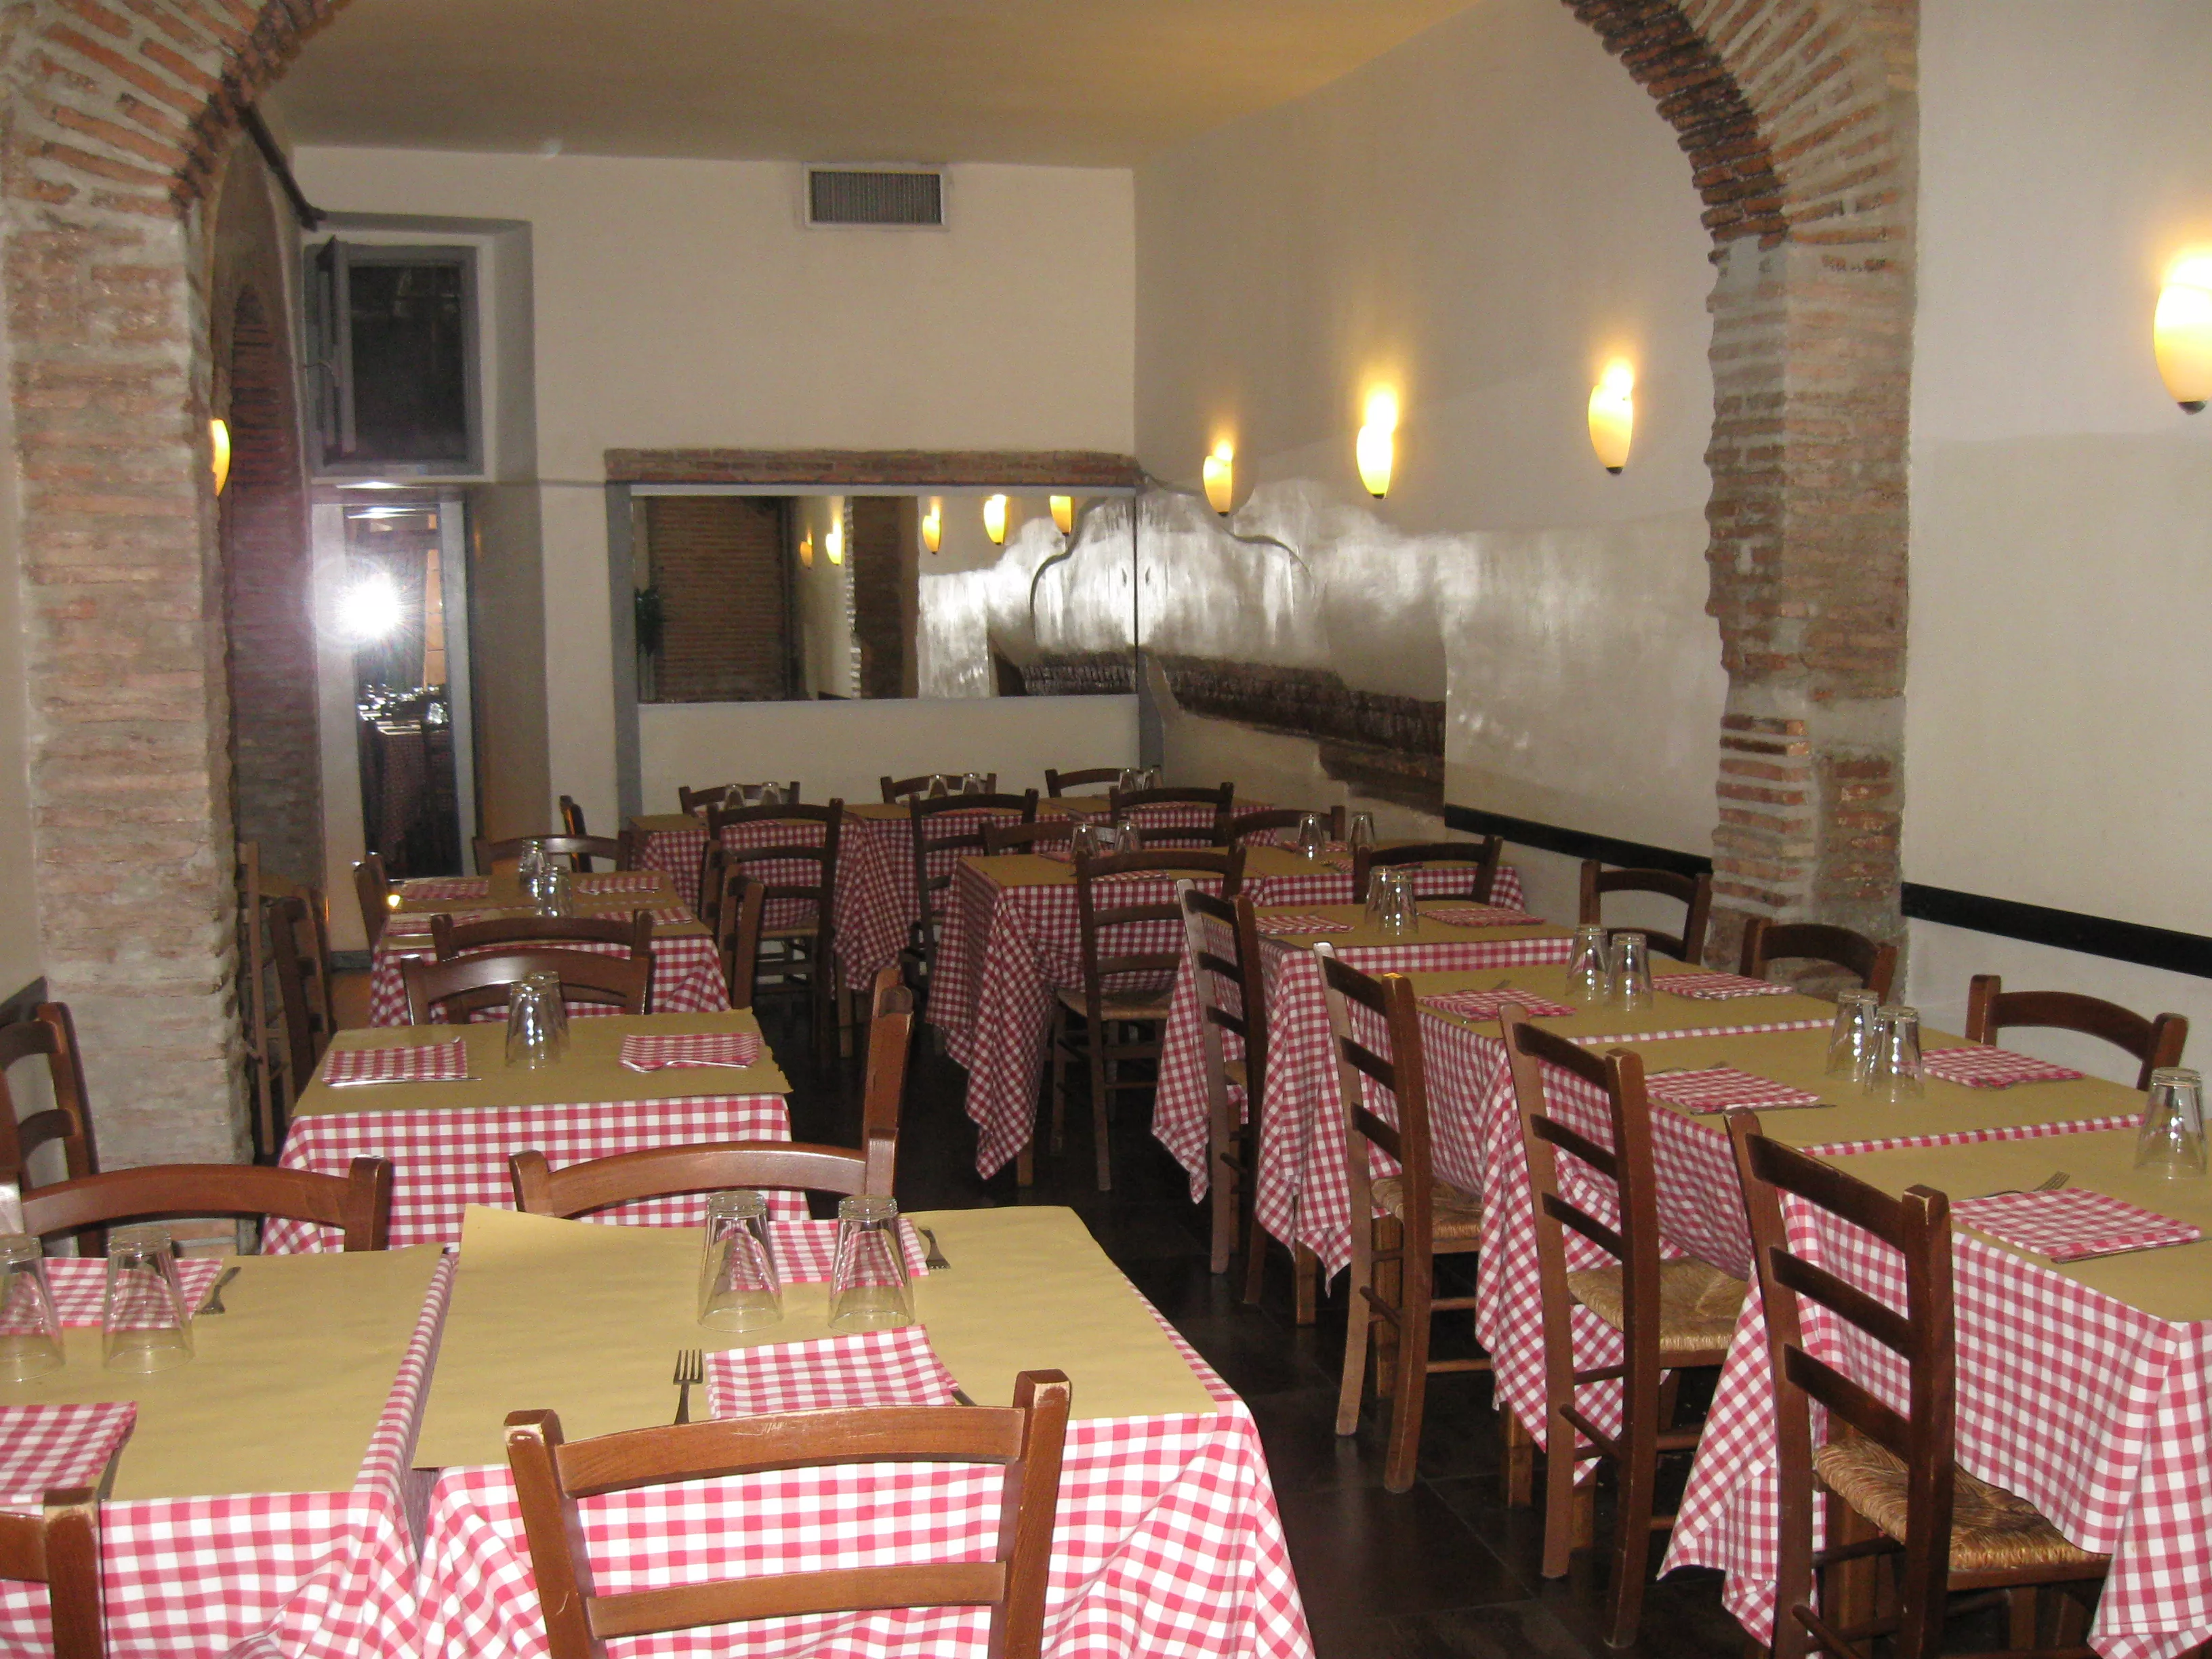 Ristorante Il Centro in Italy, Europe | Restaurants - Rated 0.7